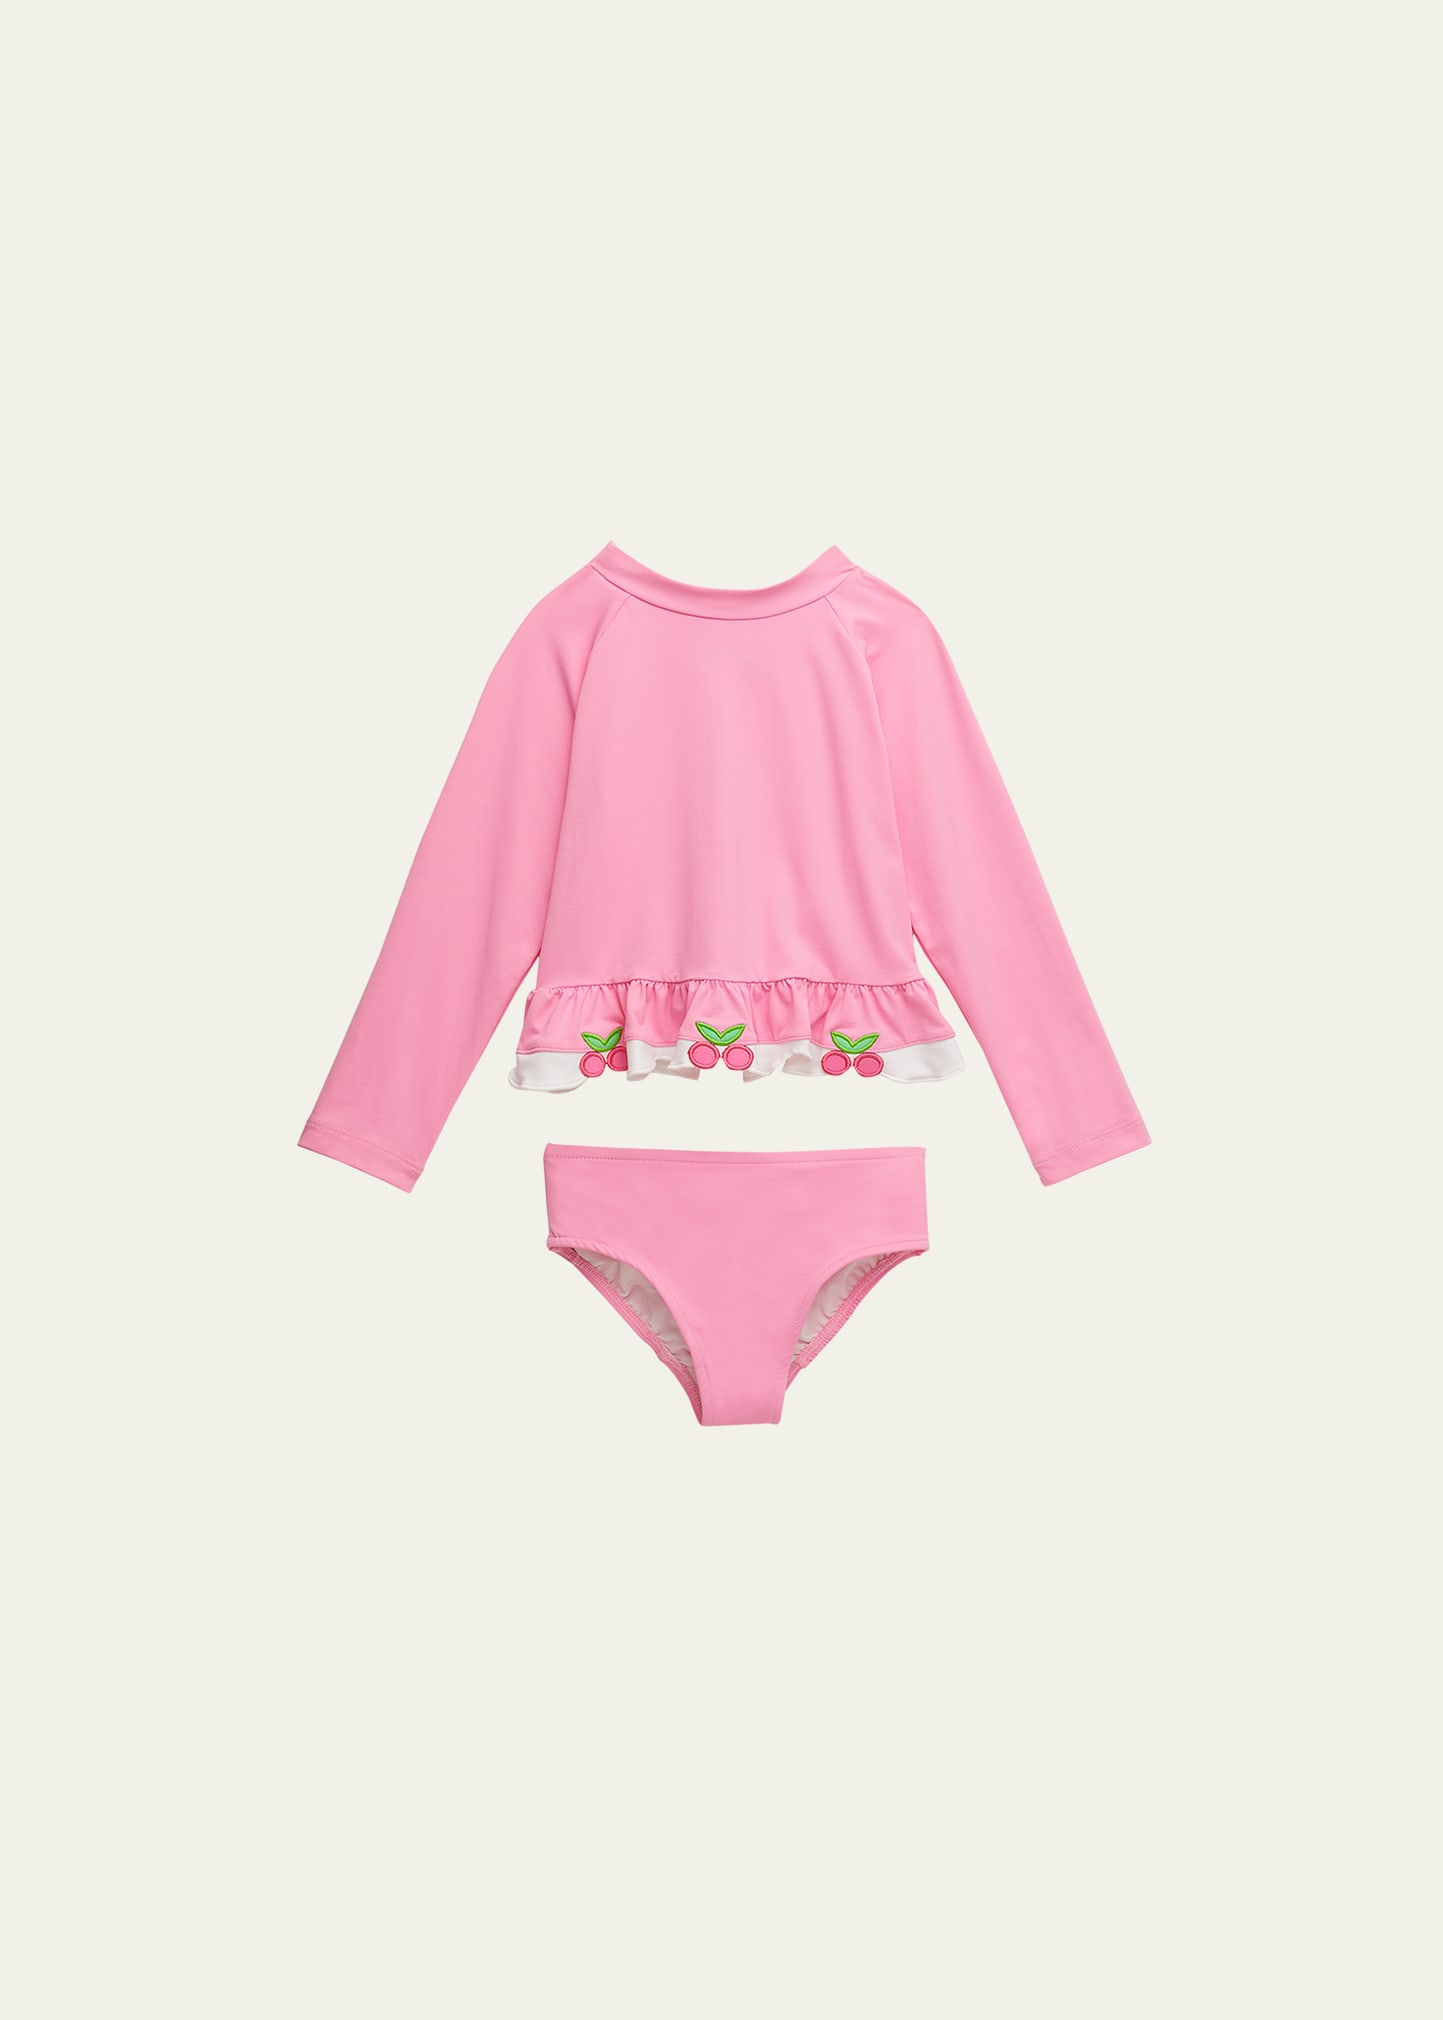 Florence Eiseman Kids' Girl's Cherry Applique Two-piece Rashguard Set In Pink